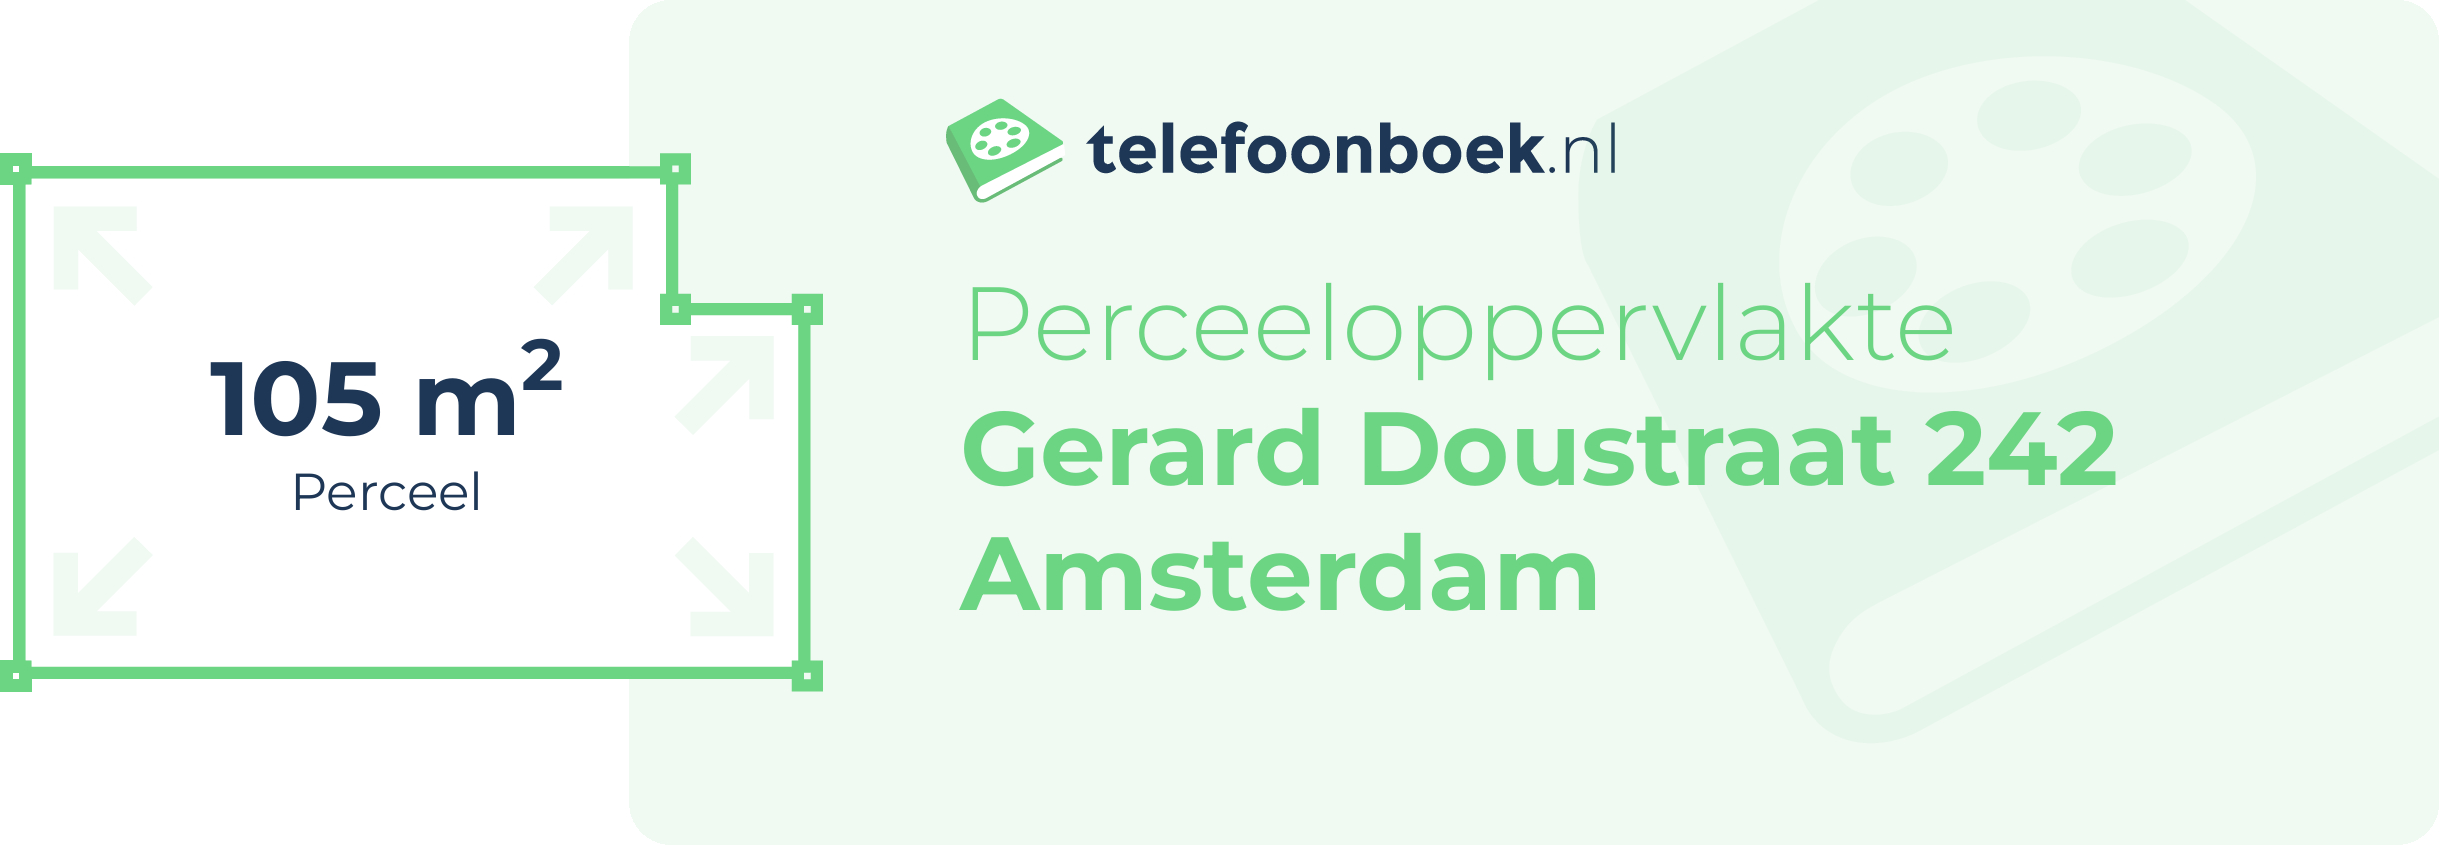 Perceeloppervlakte Gerard Doustraat 242 Amsterdam